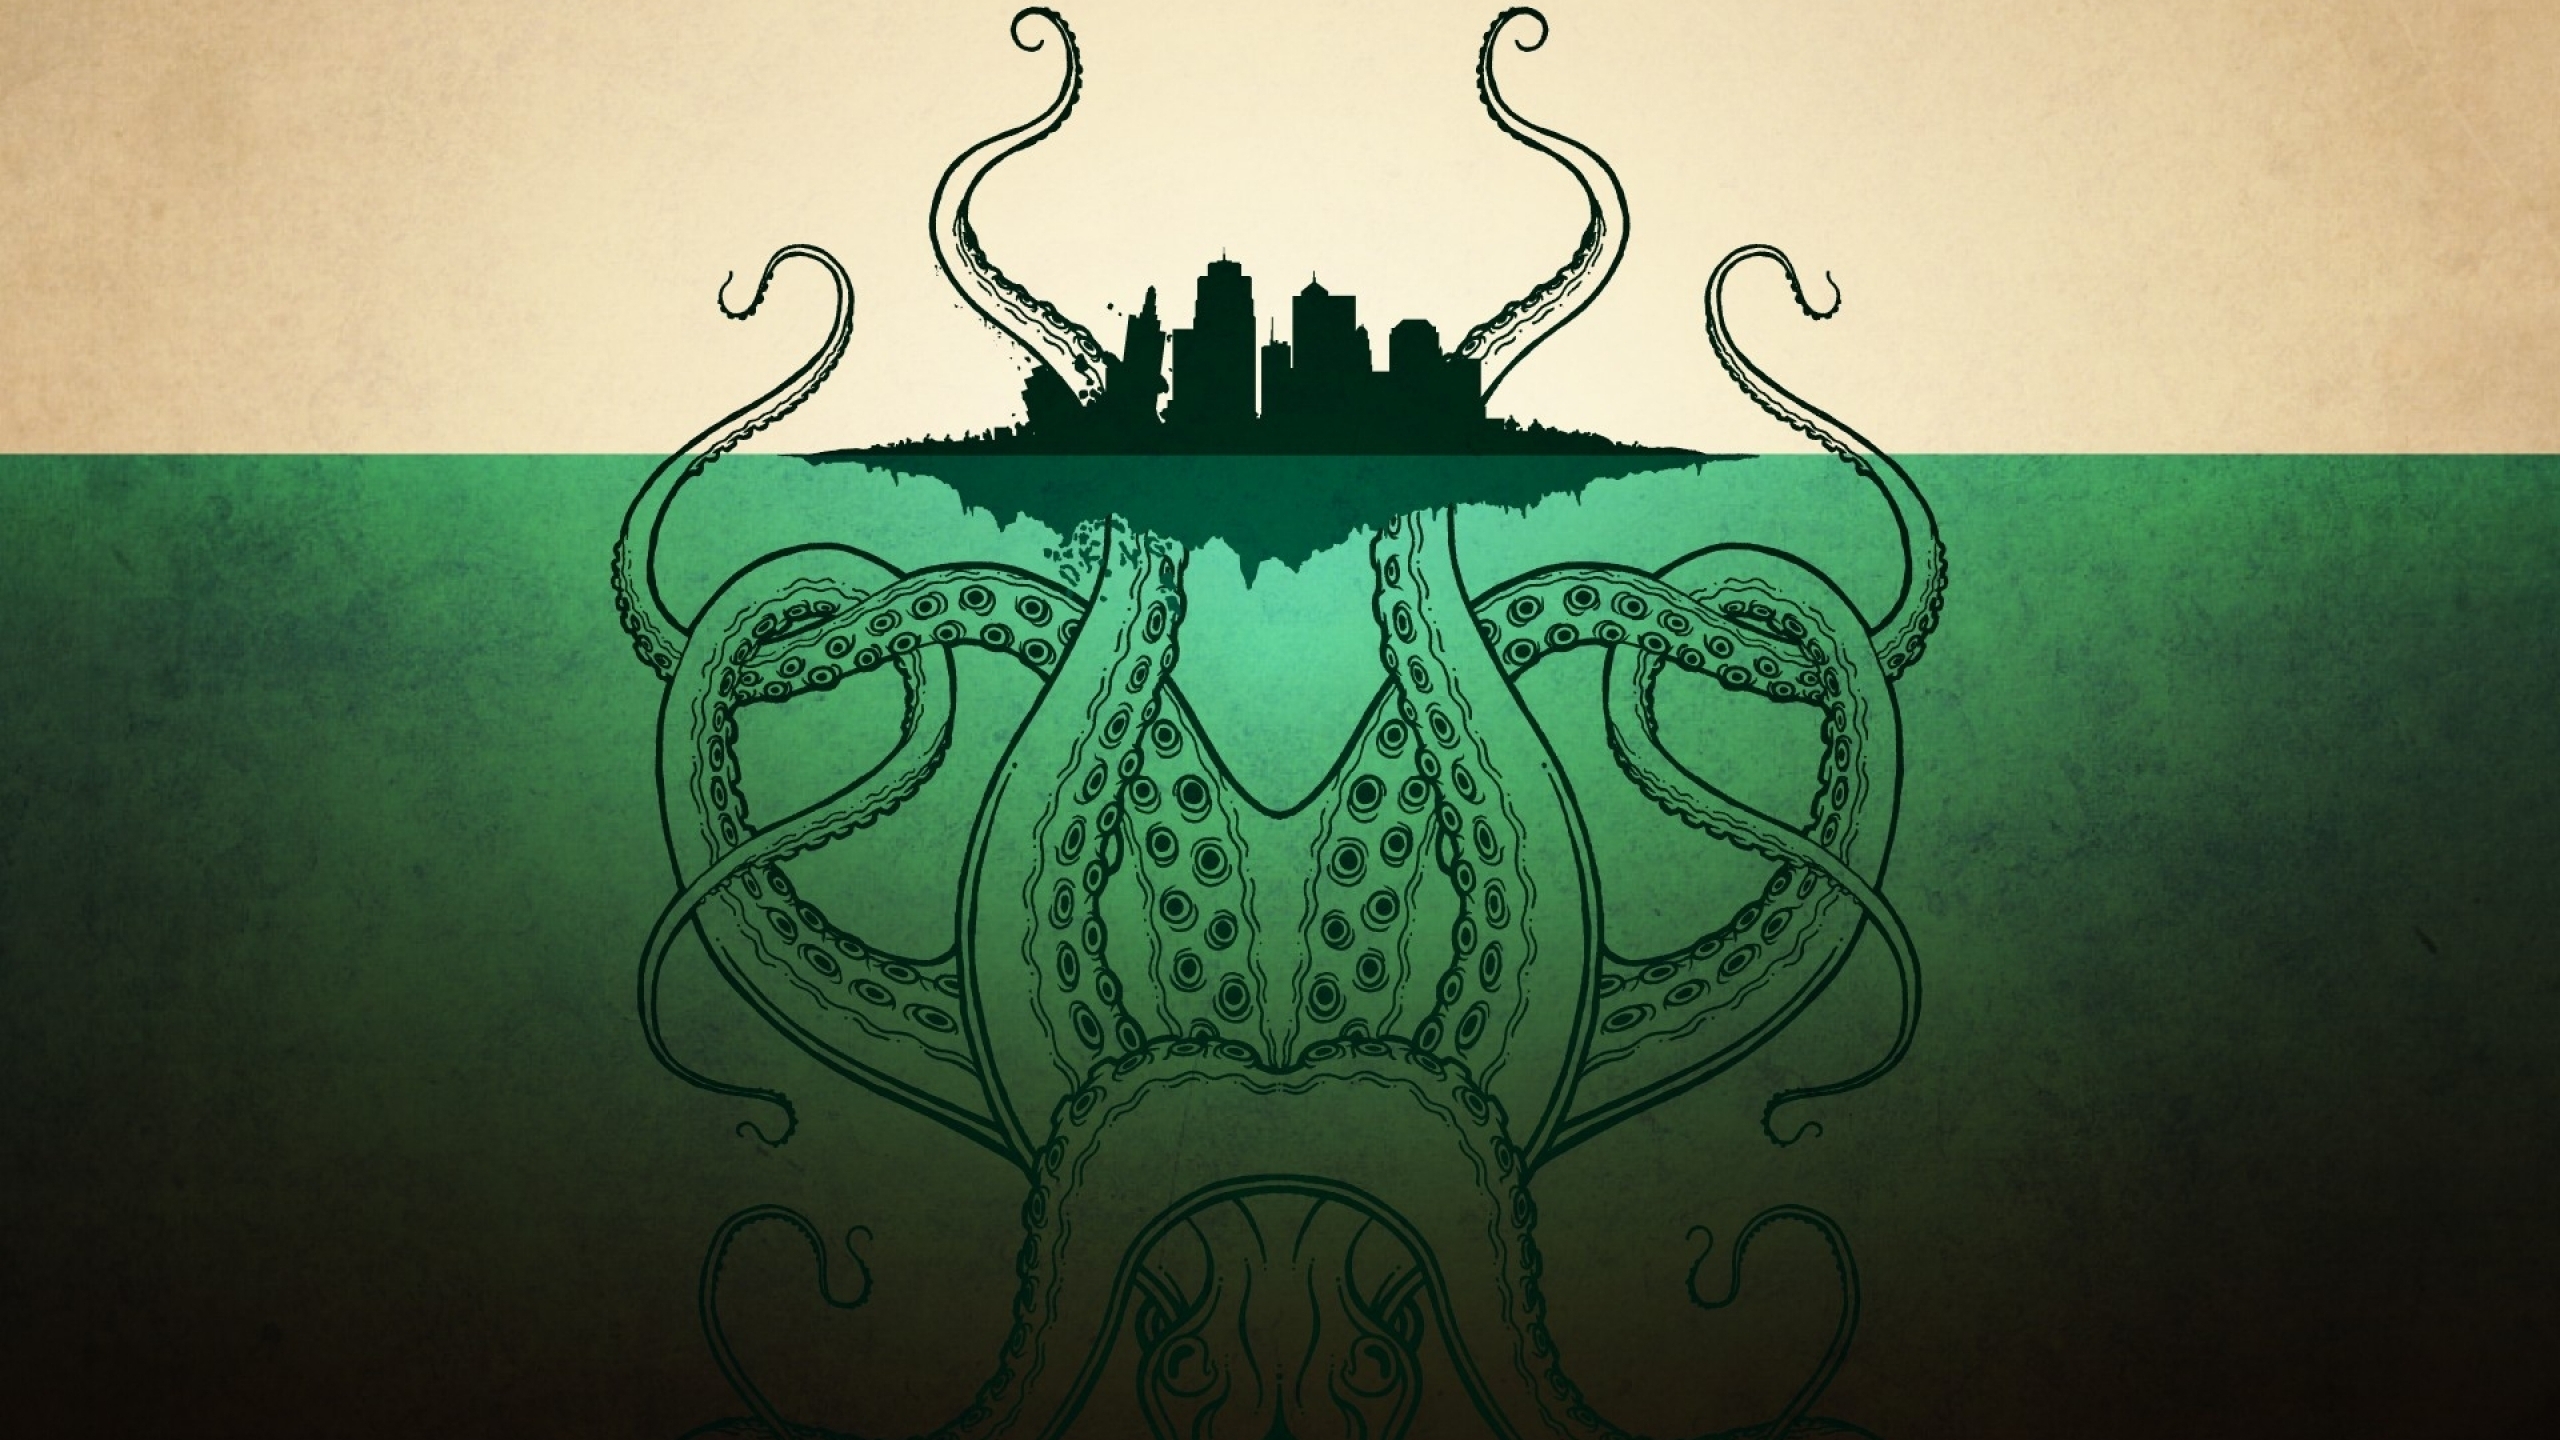 Lovecrafts Untold Stories UltraWide 219 wallpapers or desktop backgrounds